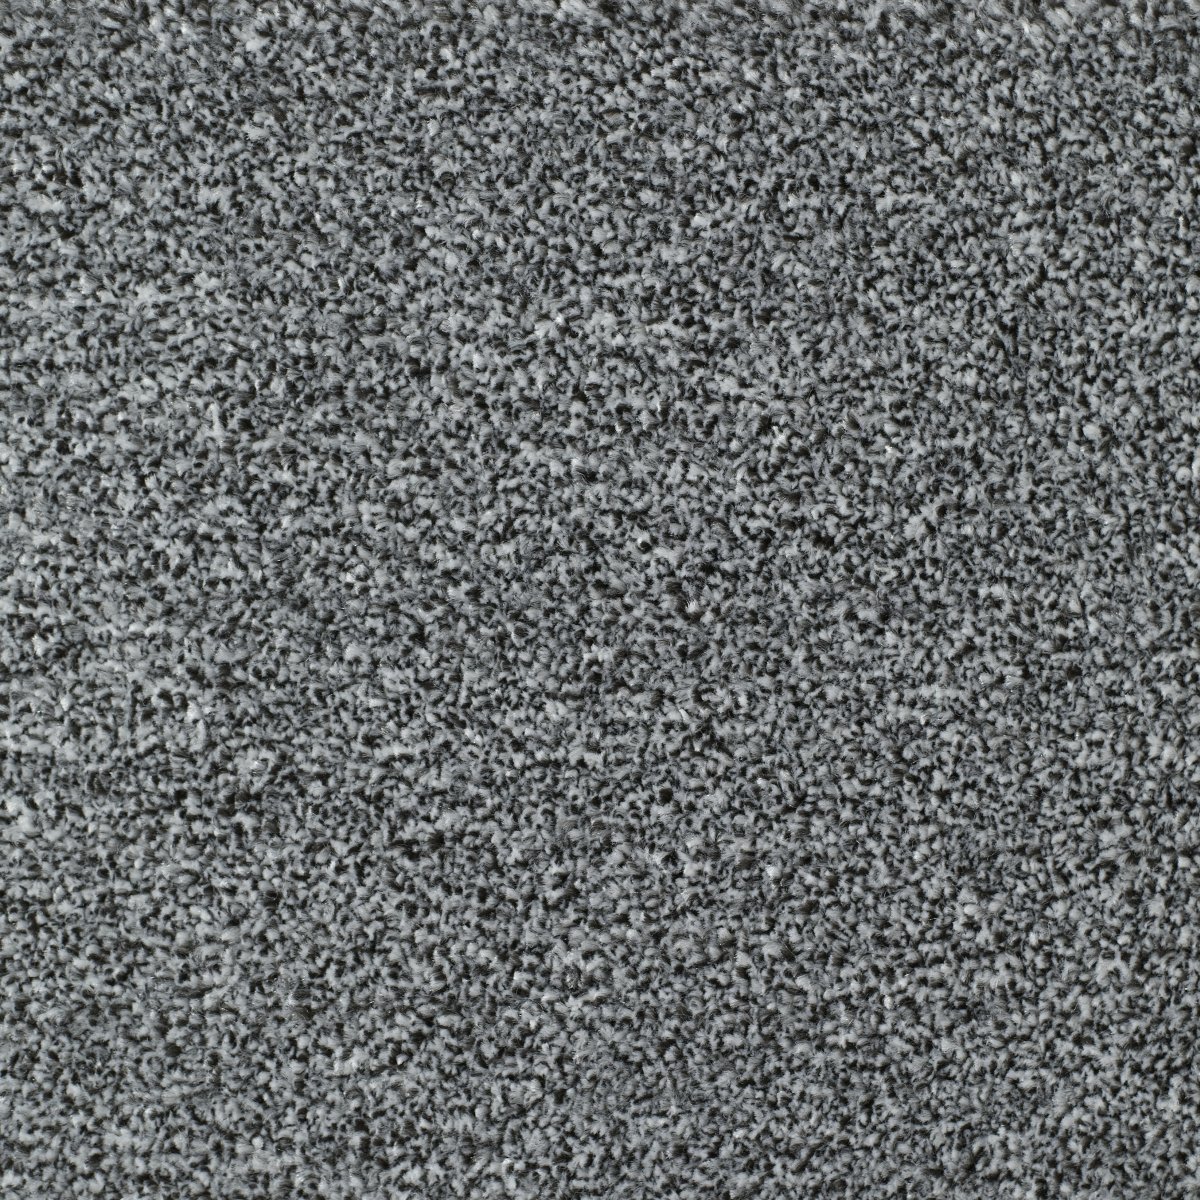 Seaton Valley Soft Deep Pile Saxony Carpet -  Granite